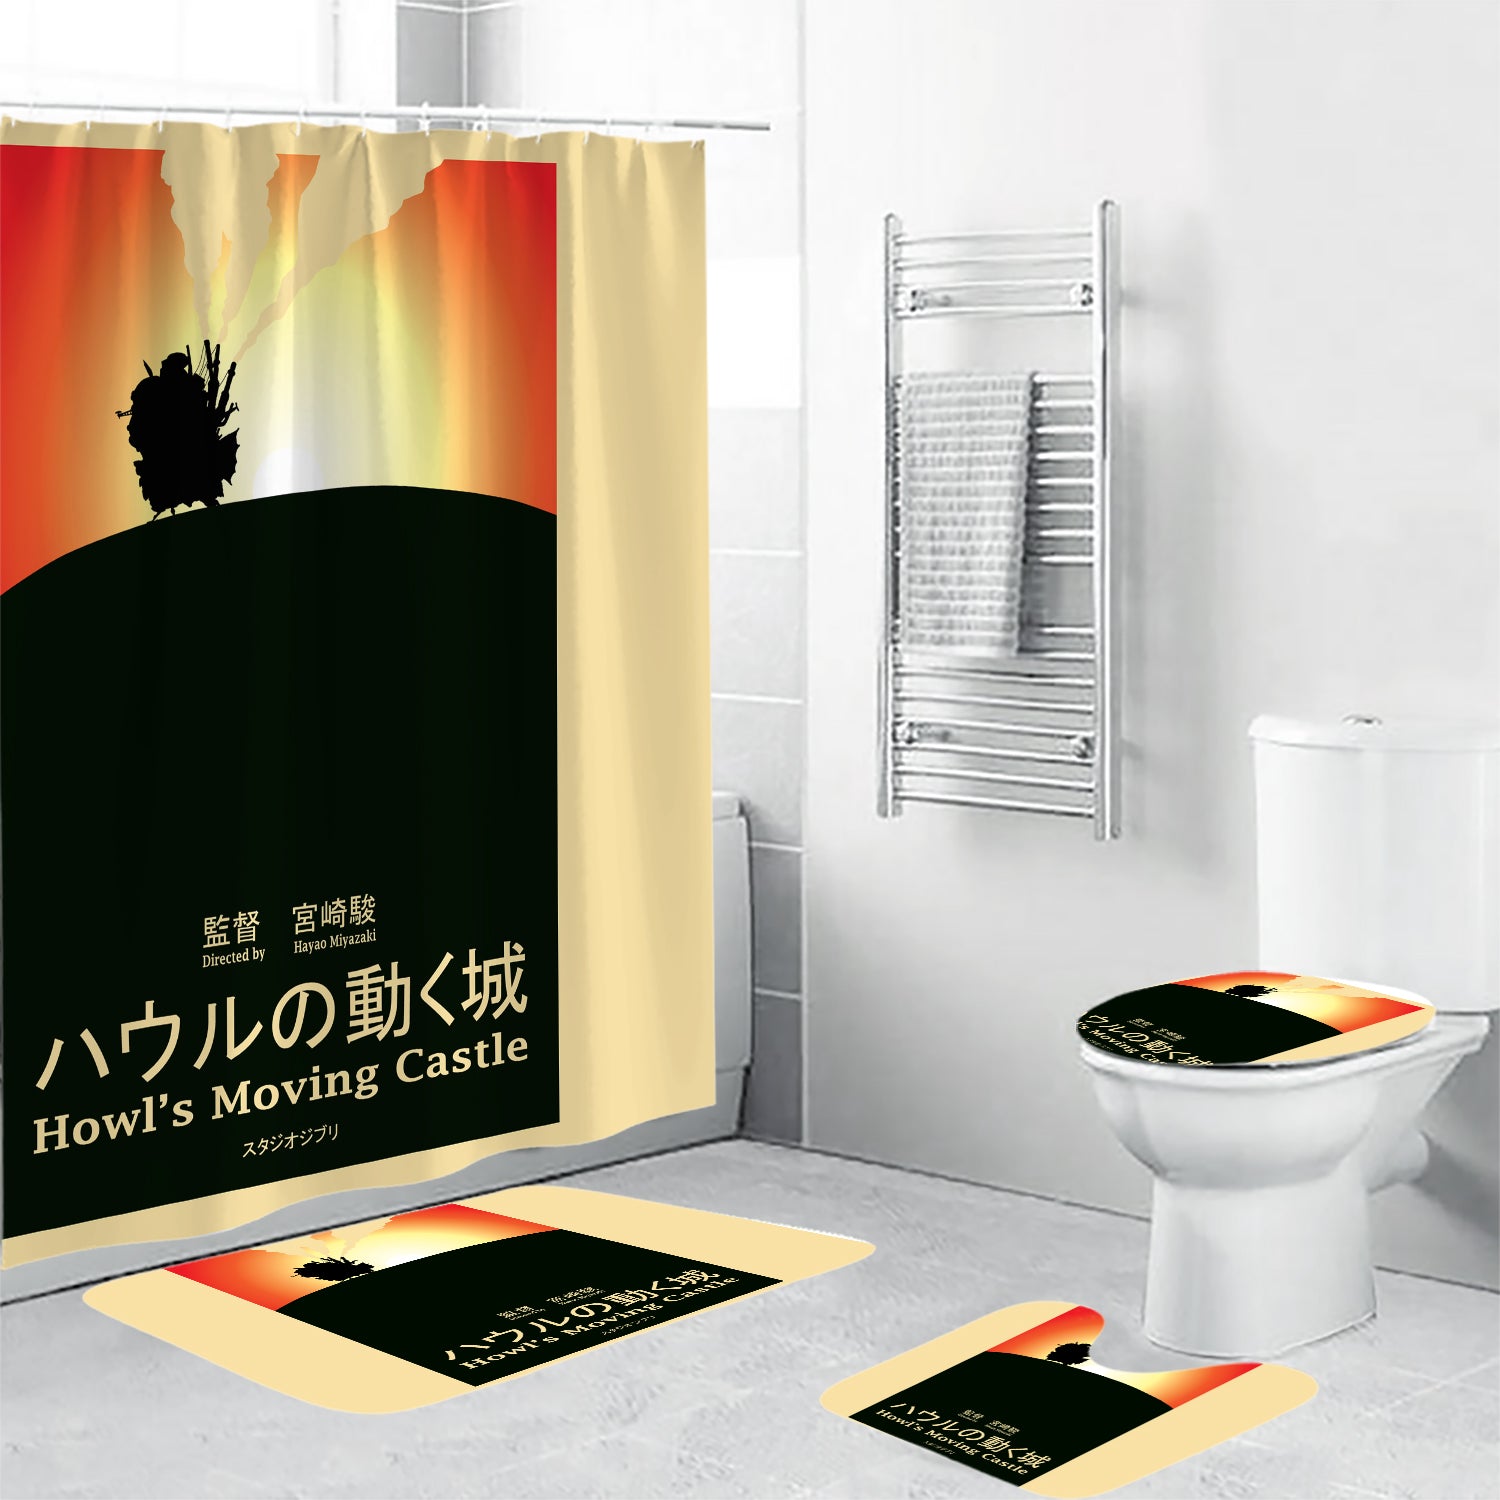 Howl's Moving Castle Poster 10 4PCS Shower Curtain Non-Slip Toilet Lid Cover Bath Mat - Bathroom Set Fans Gifts